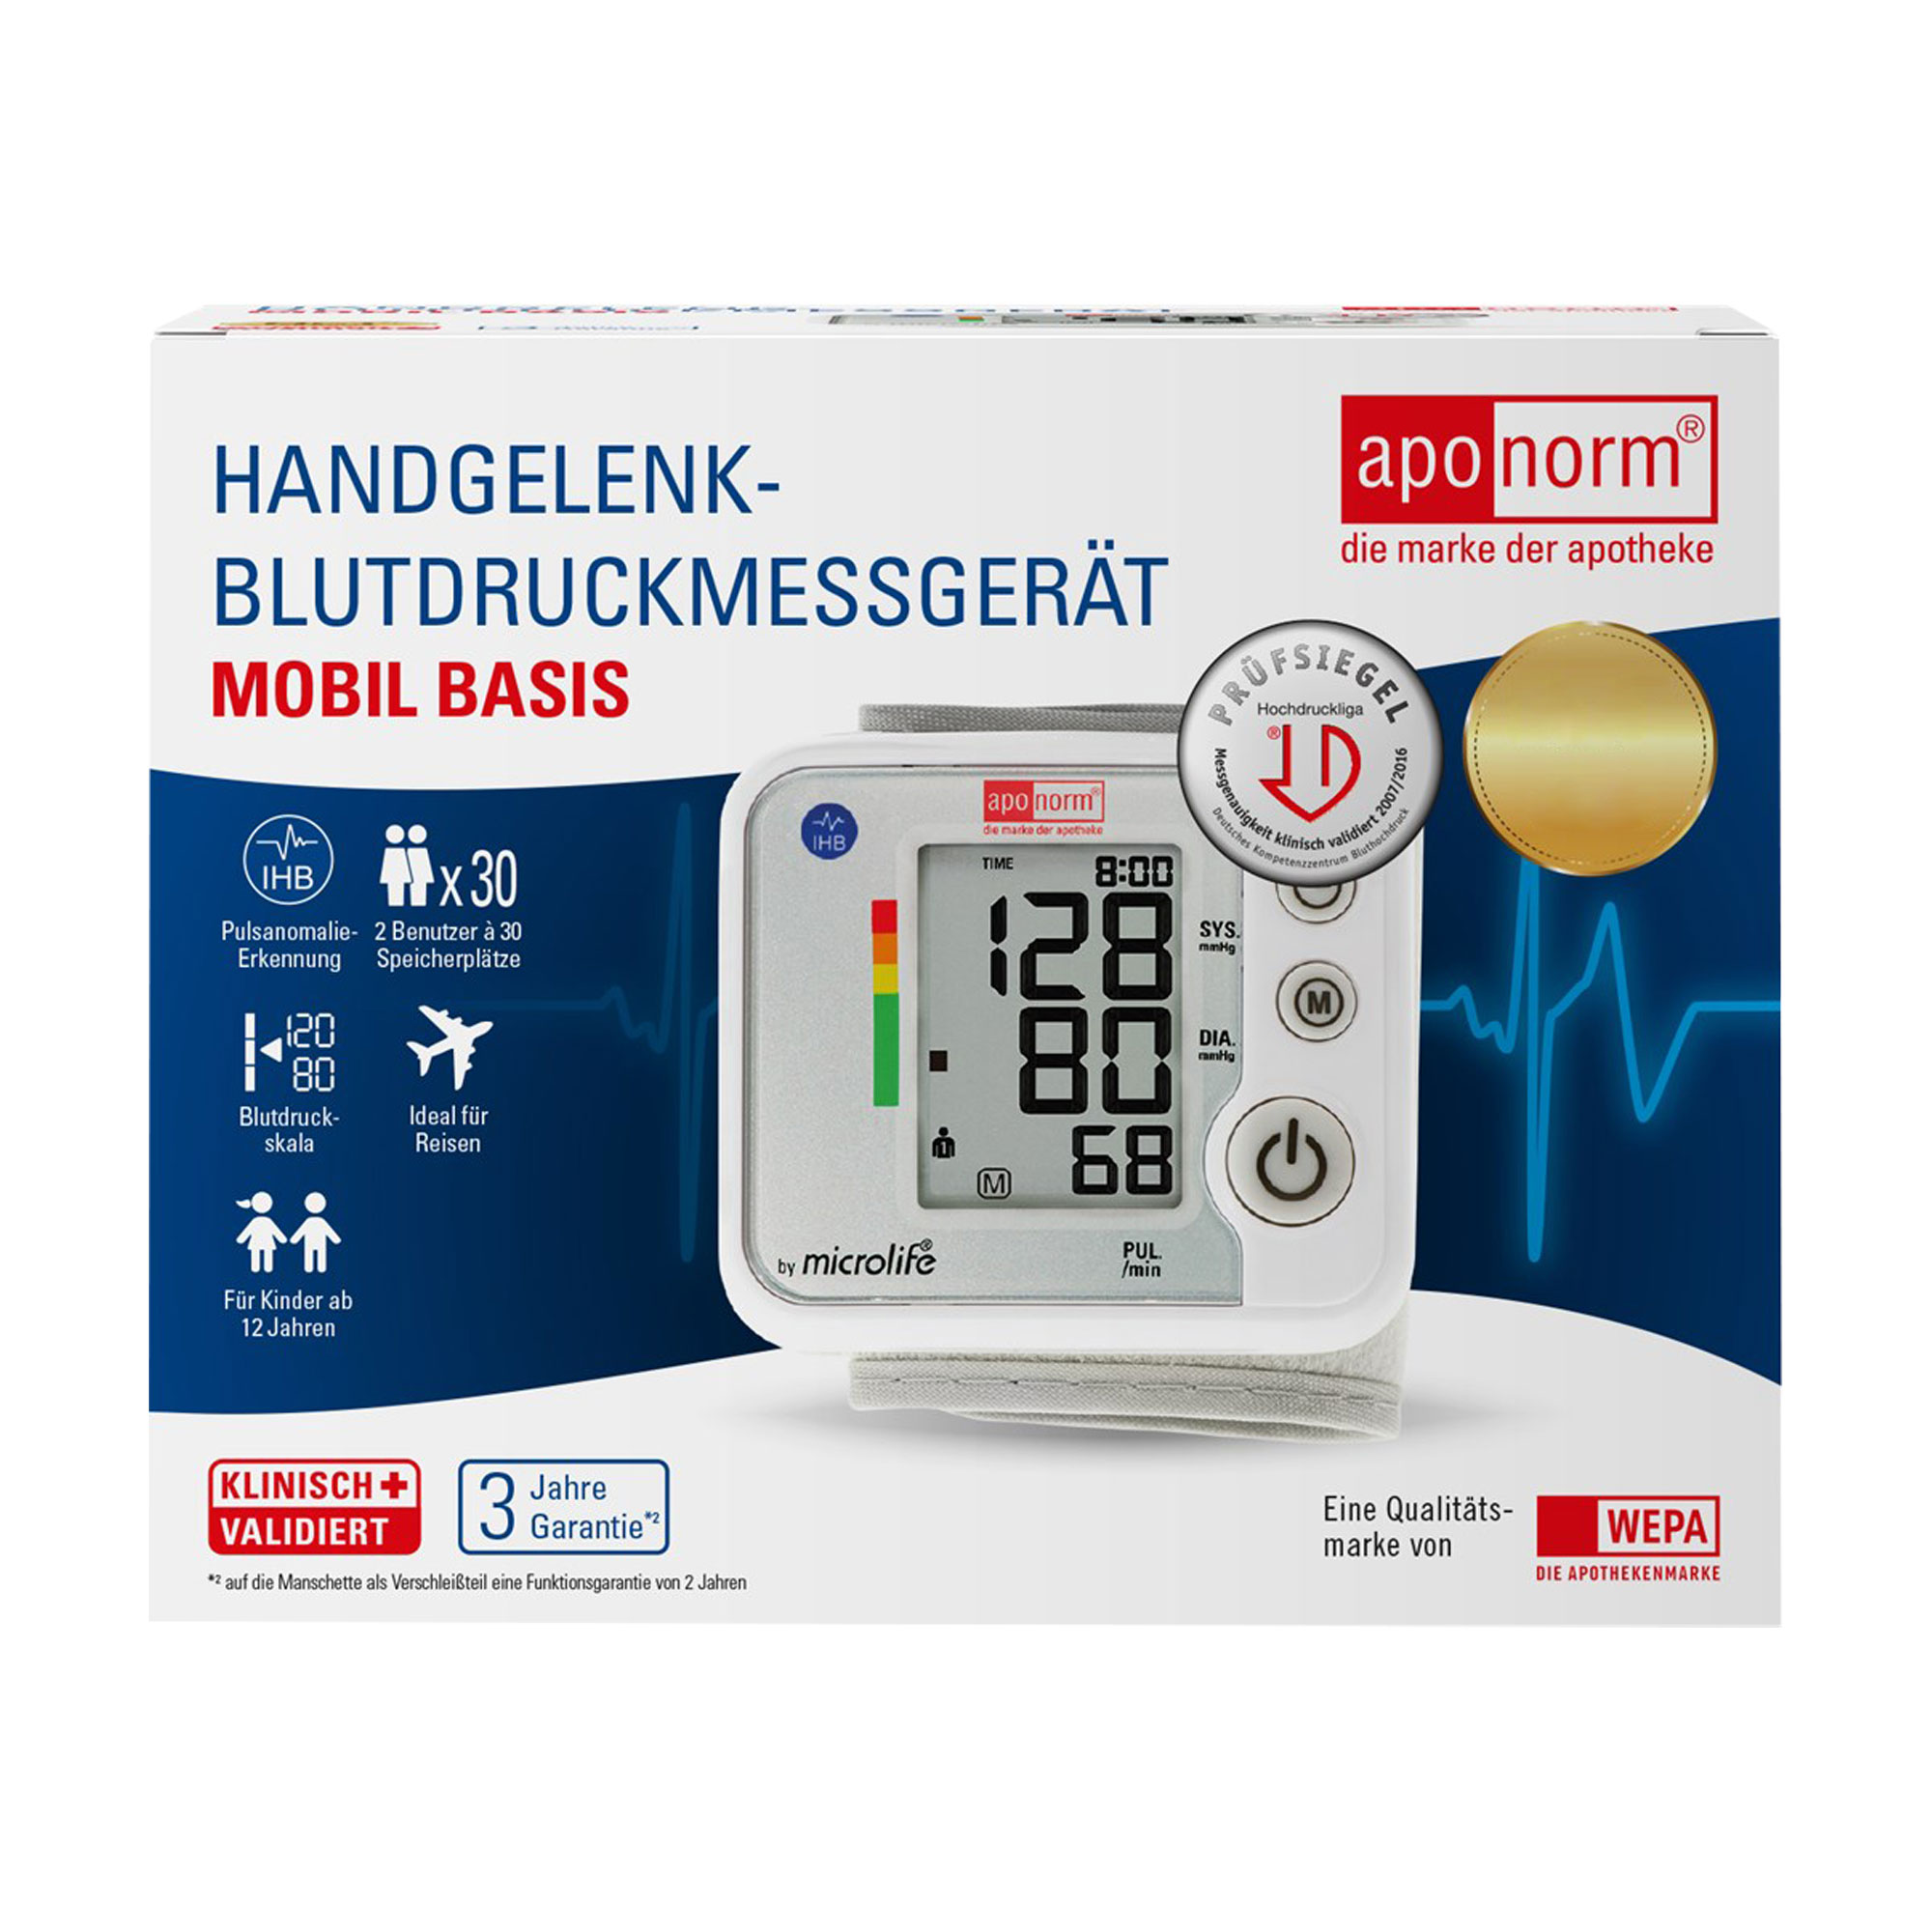 Blutdruckmessgerät fürs Handgelenk. Ideal für Blutdruckmess-Neulingen.